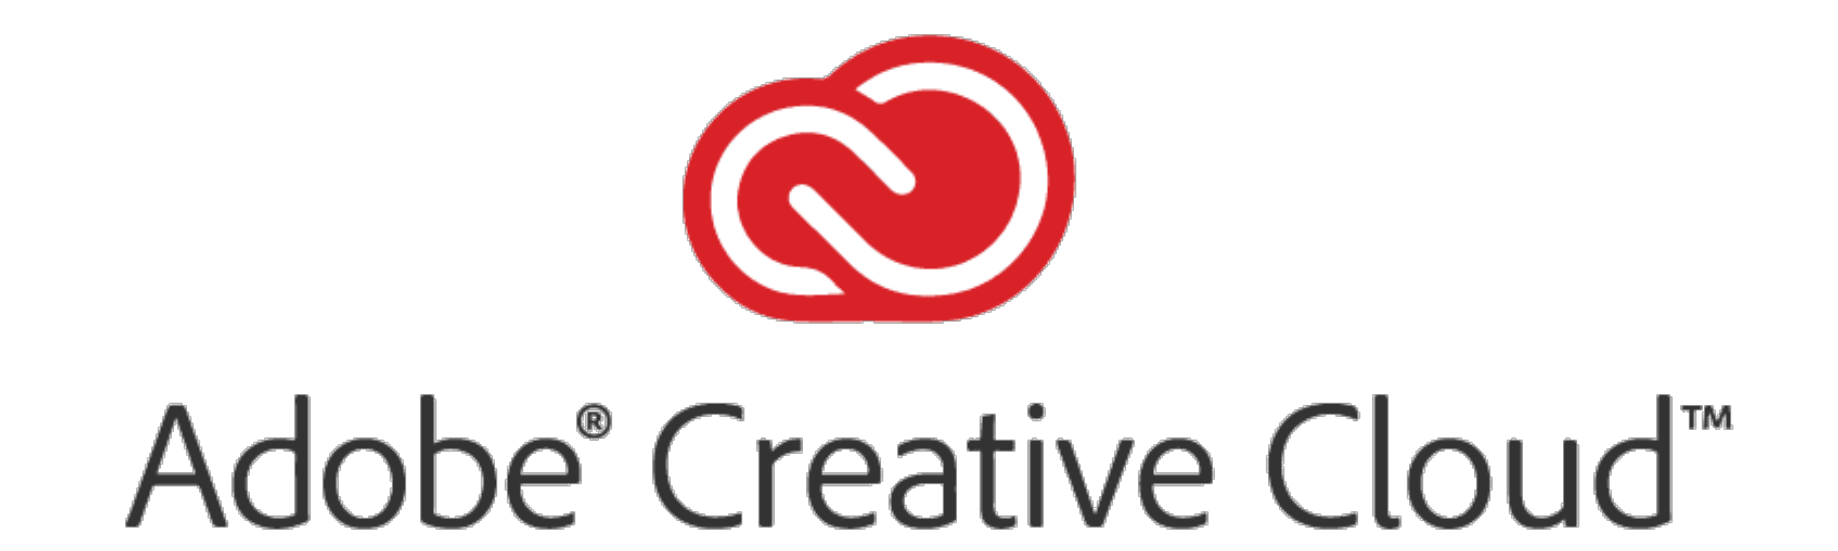 Free Adobe Creative Cloud Trial